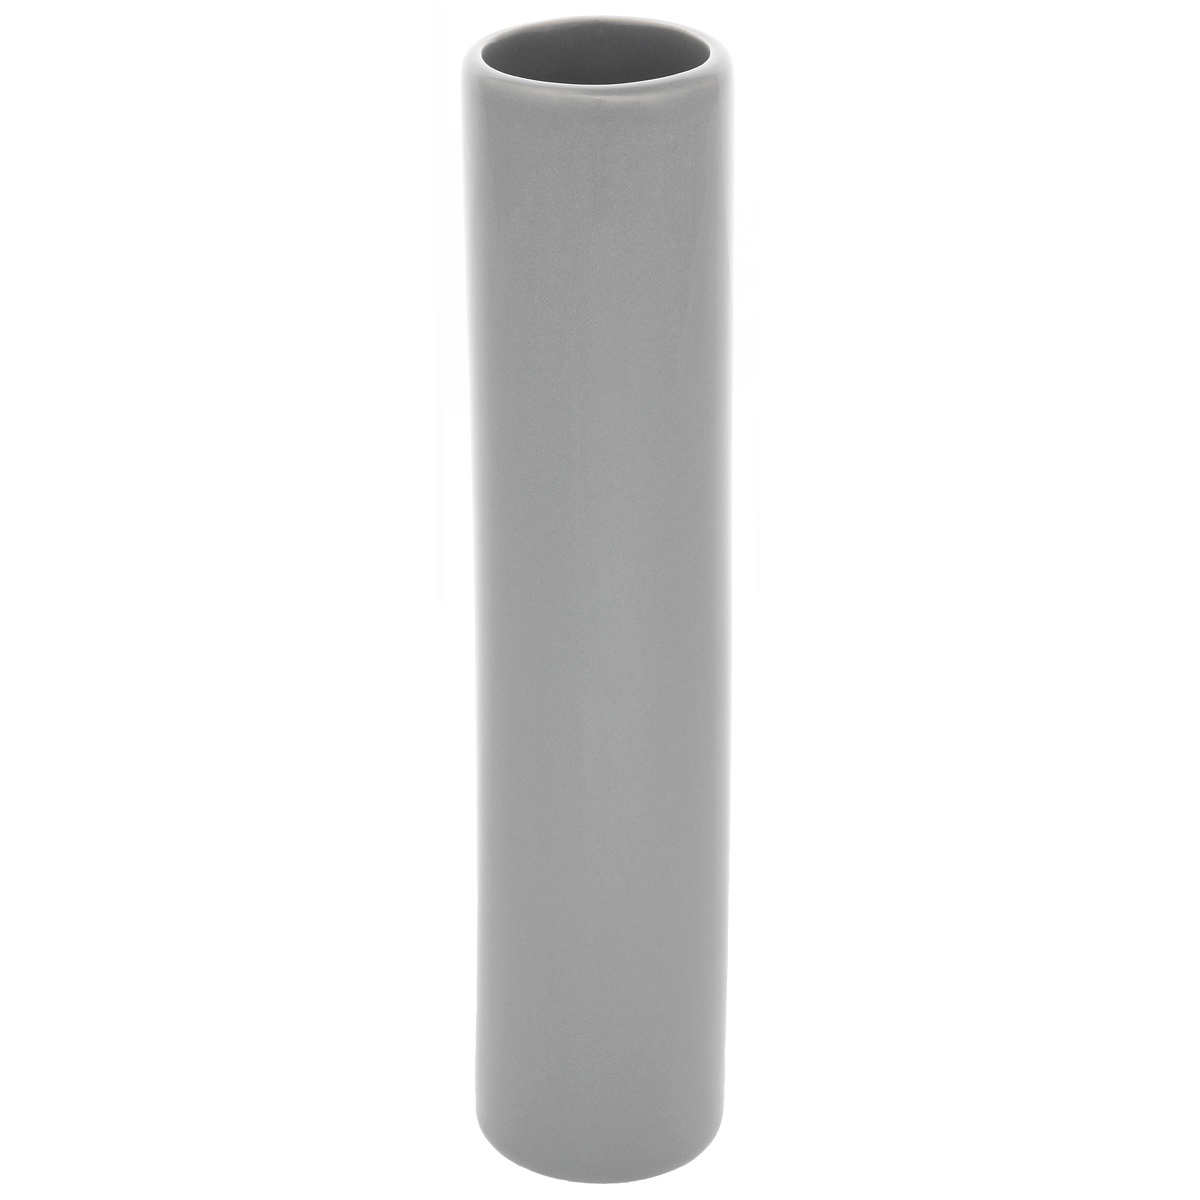 Keramická váza Tube, 5 x 24 x 5 cm, šedá